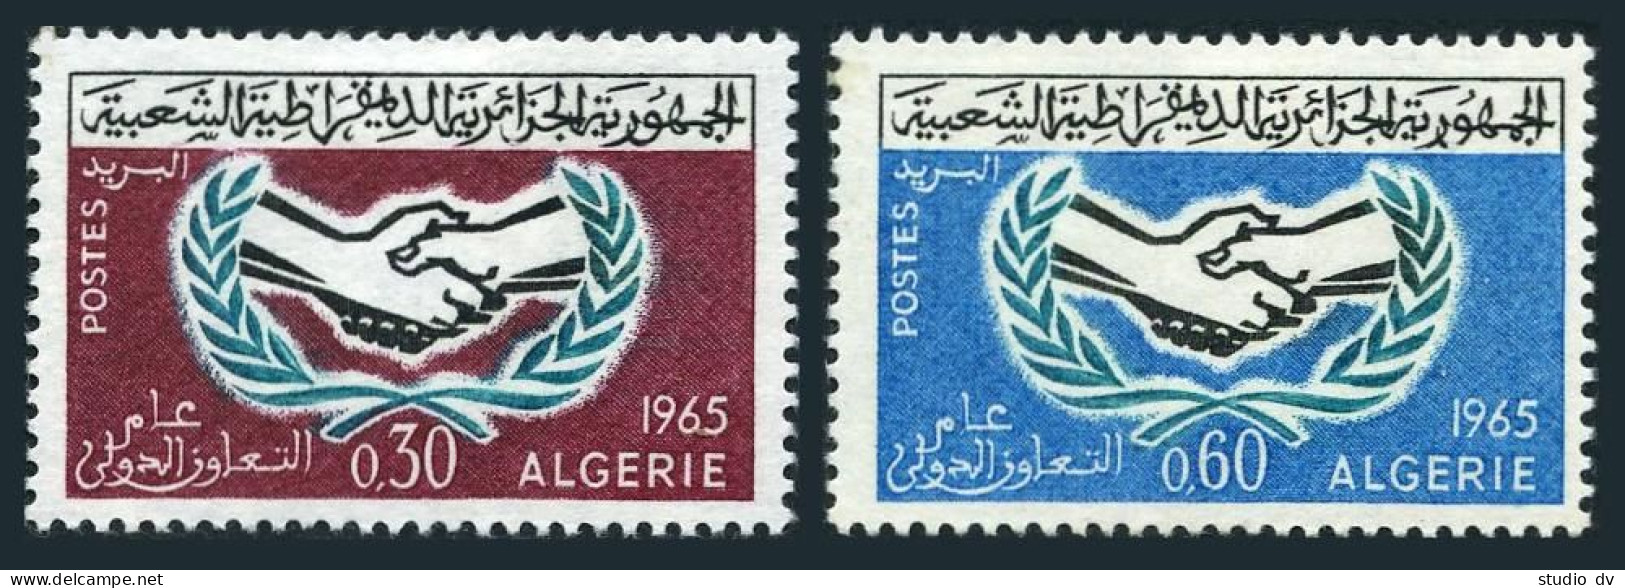 Algeria 337-338,MNH.Michel 437-438. Cooperation Year ICY-1965.Emblem. - Algerien (1962-...)